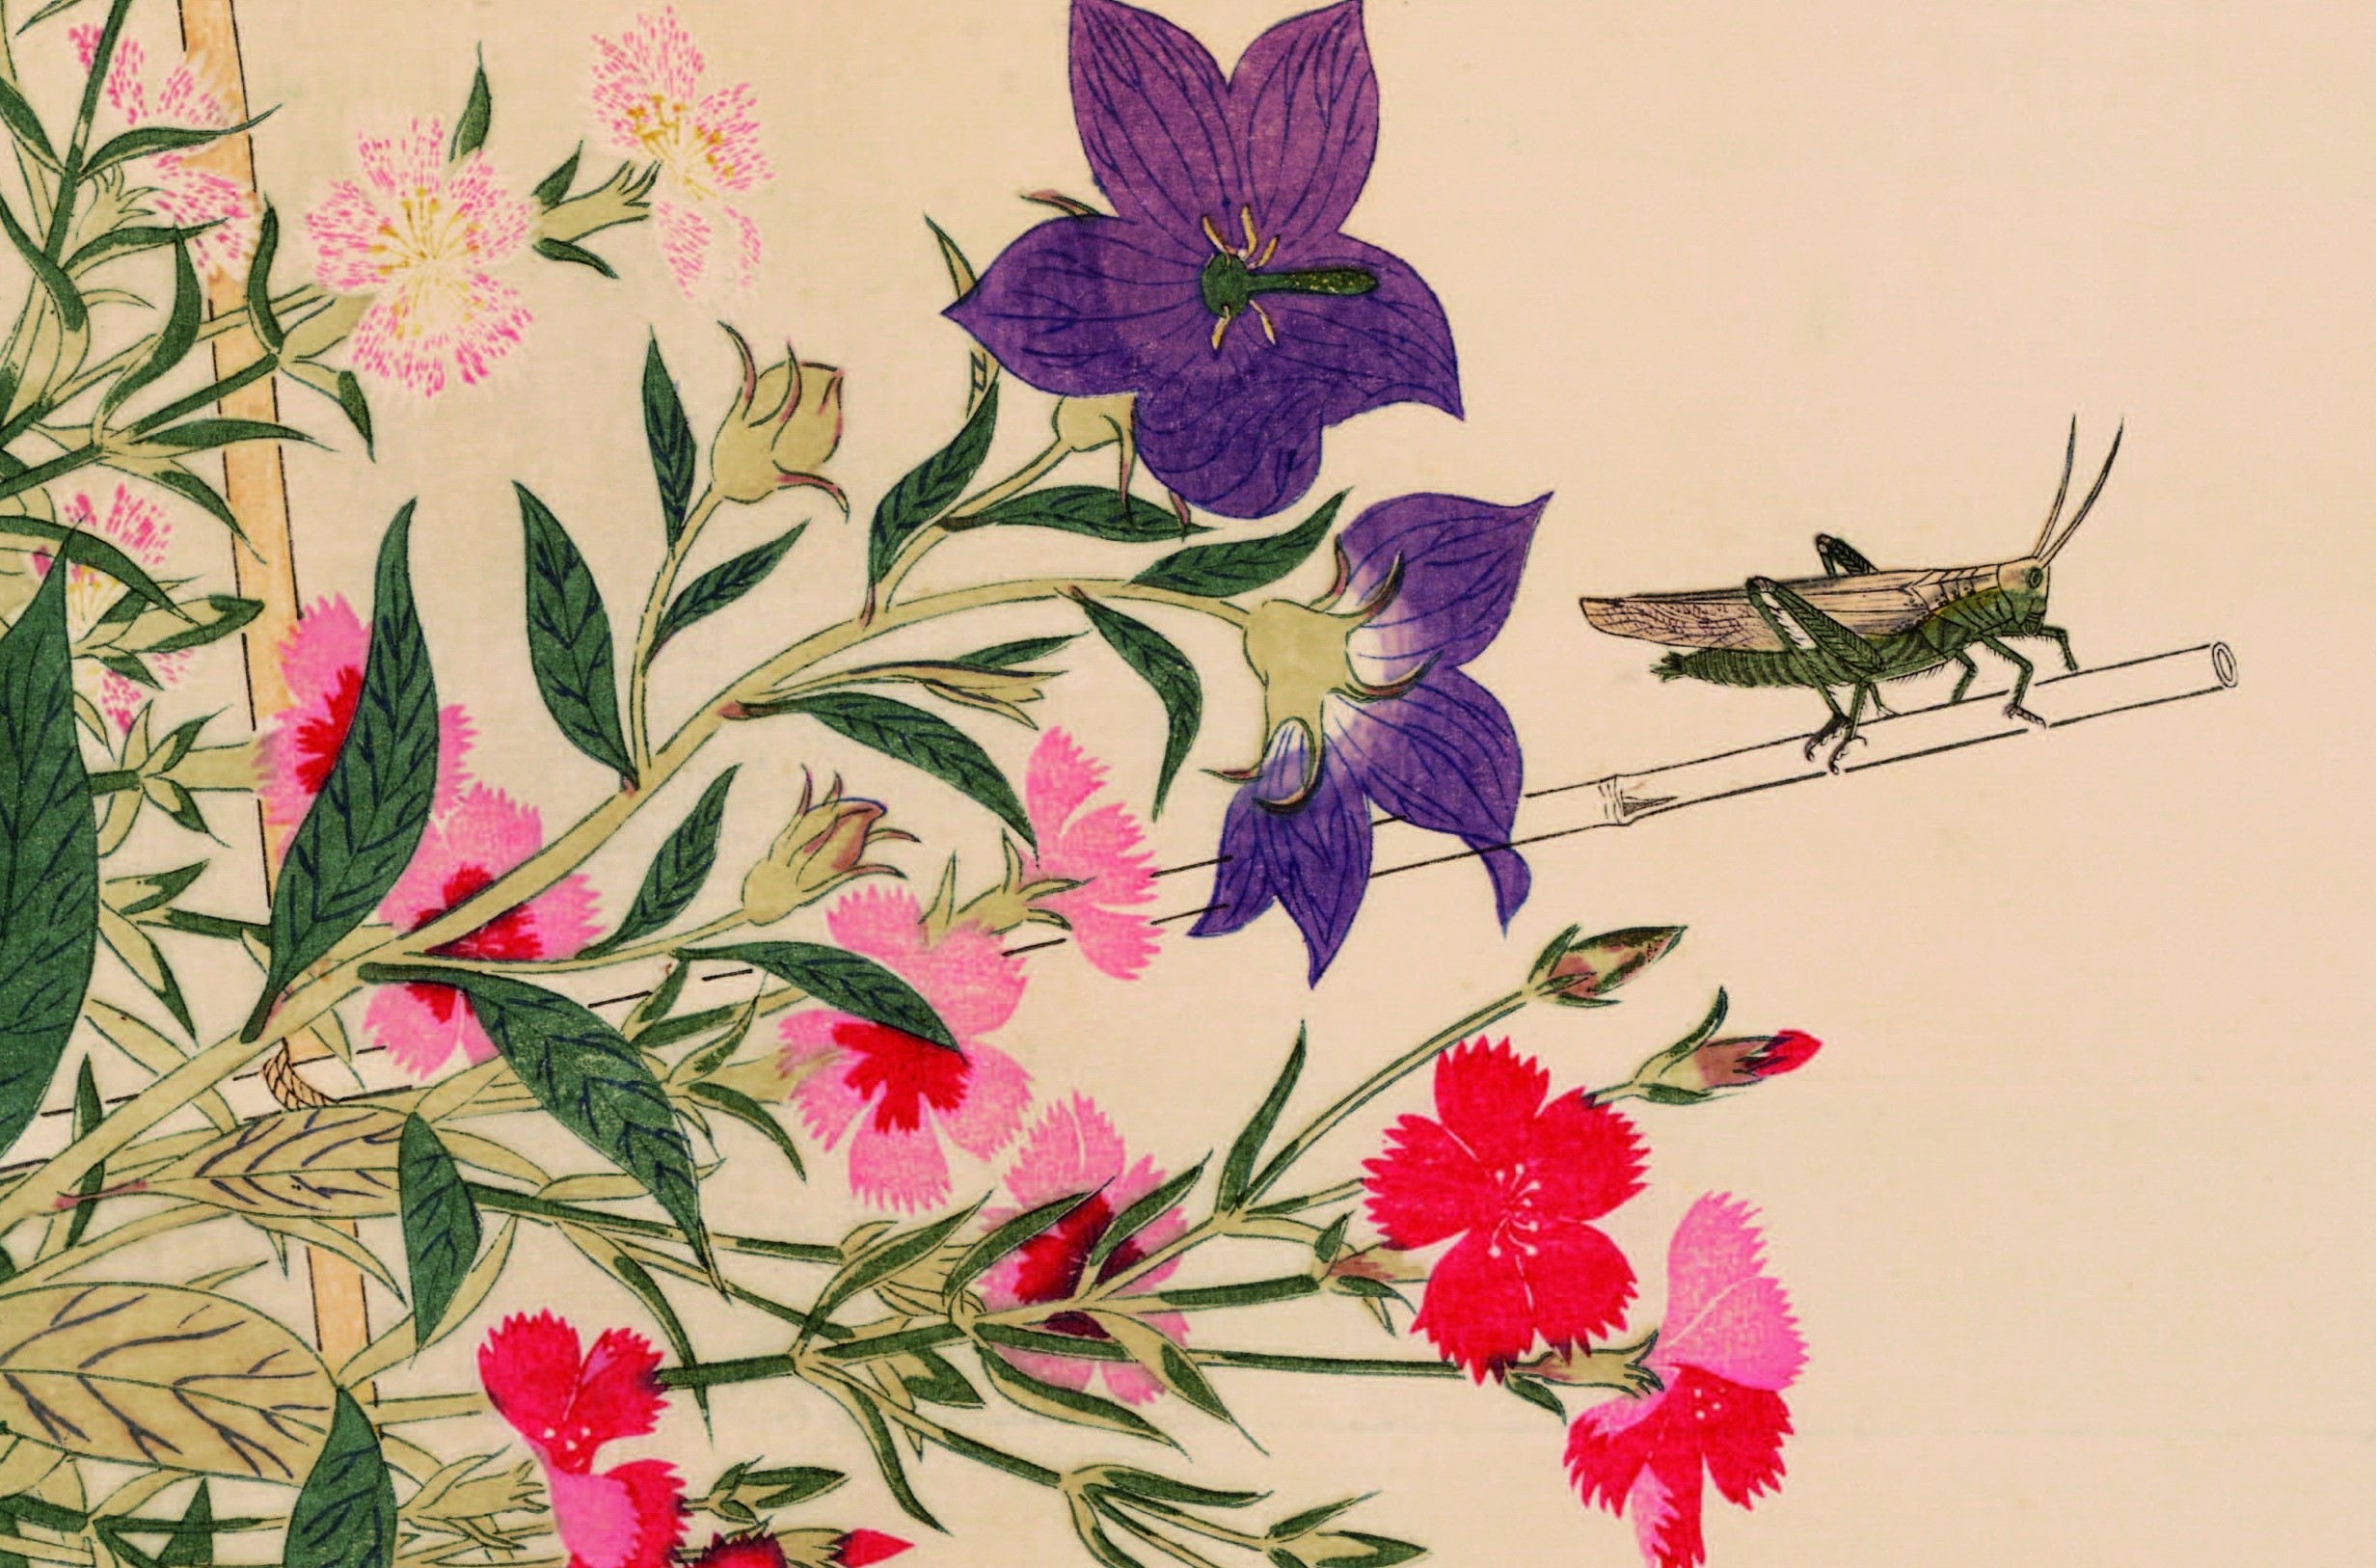 Utamaro print representing a grasshopper among pink and purple flowers.